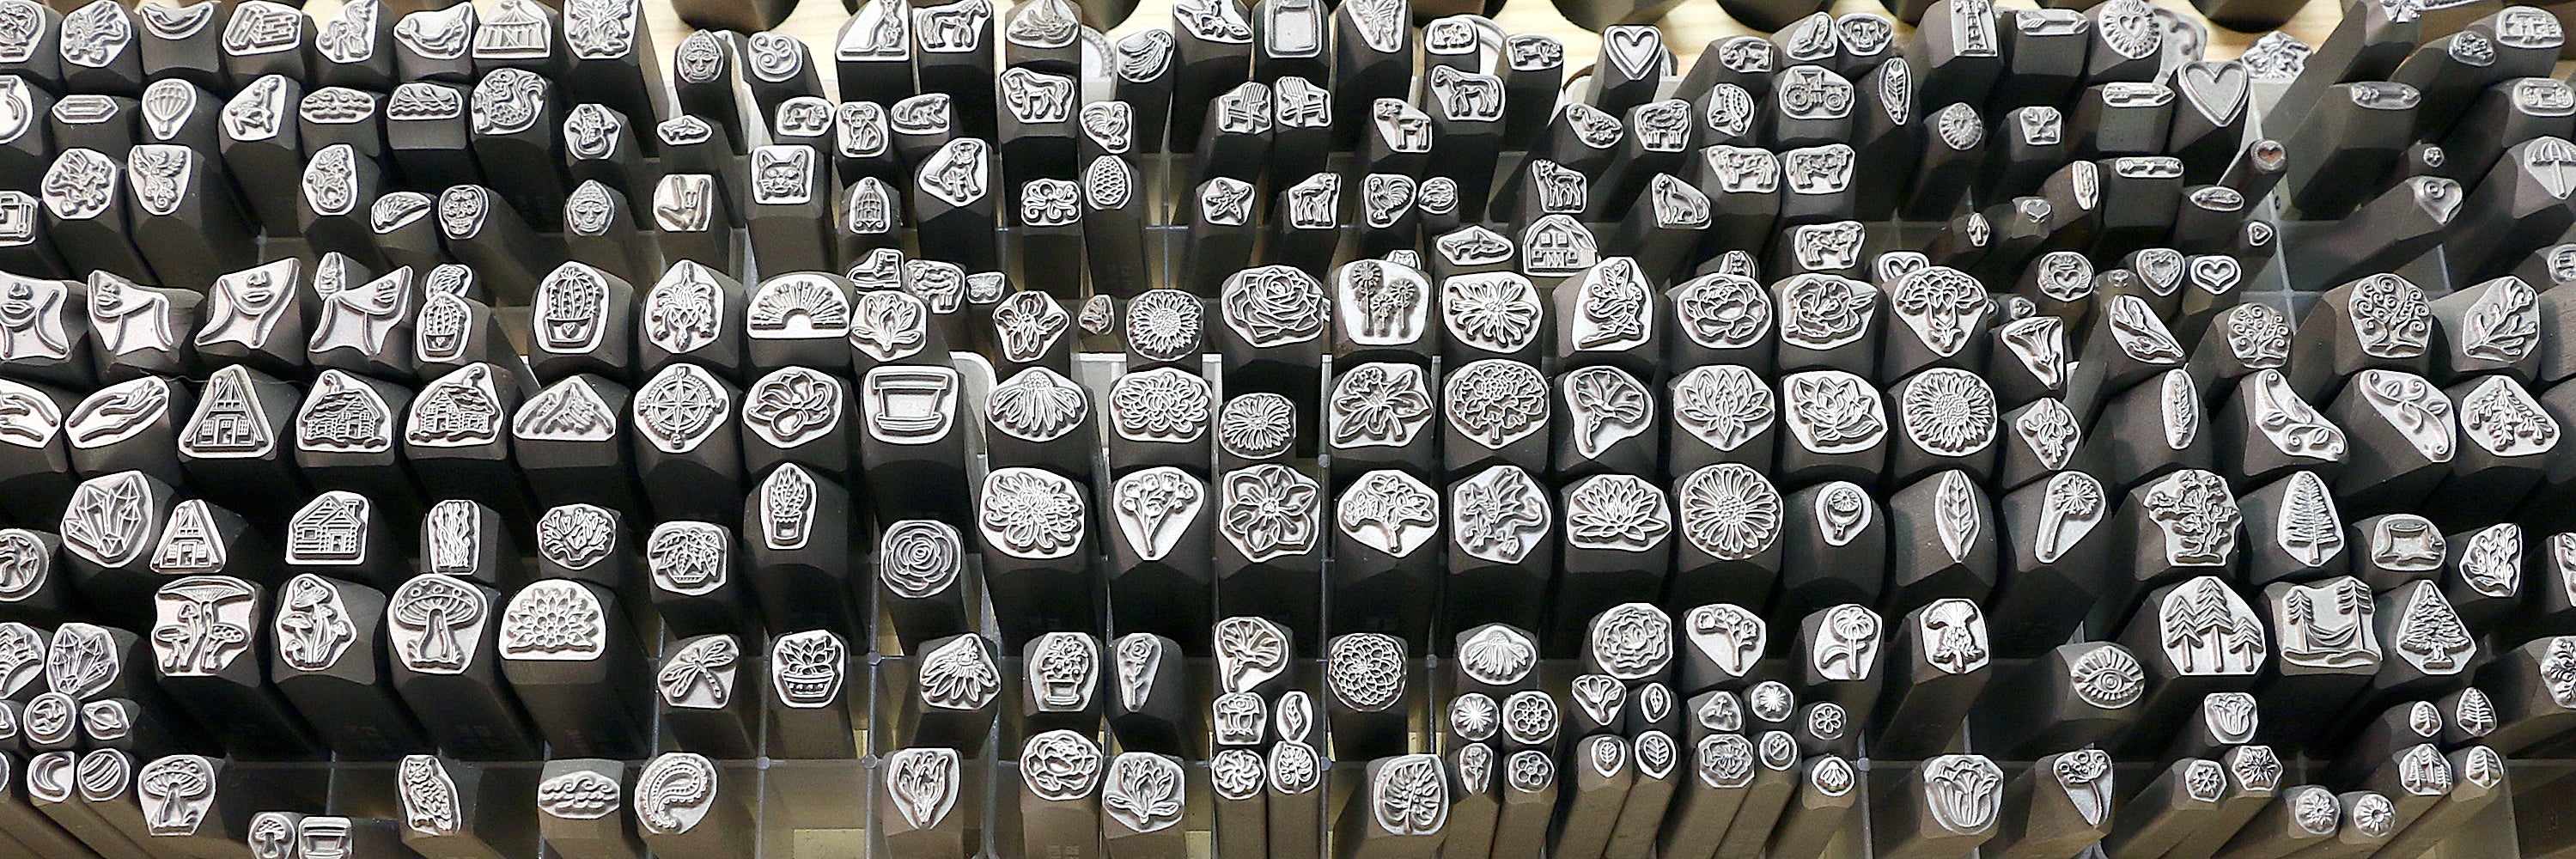  Beaducation Stamping on Metal Starter Kit, Beginner Stamping Kit  for Hand Stamped DIY Jewelry Making Crafts : Arts, Crafts & Sewing